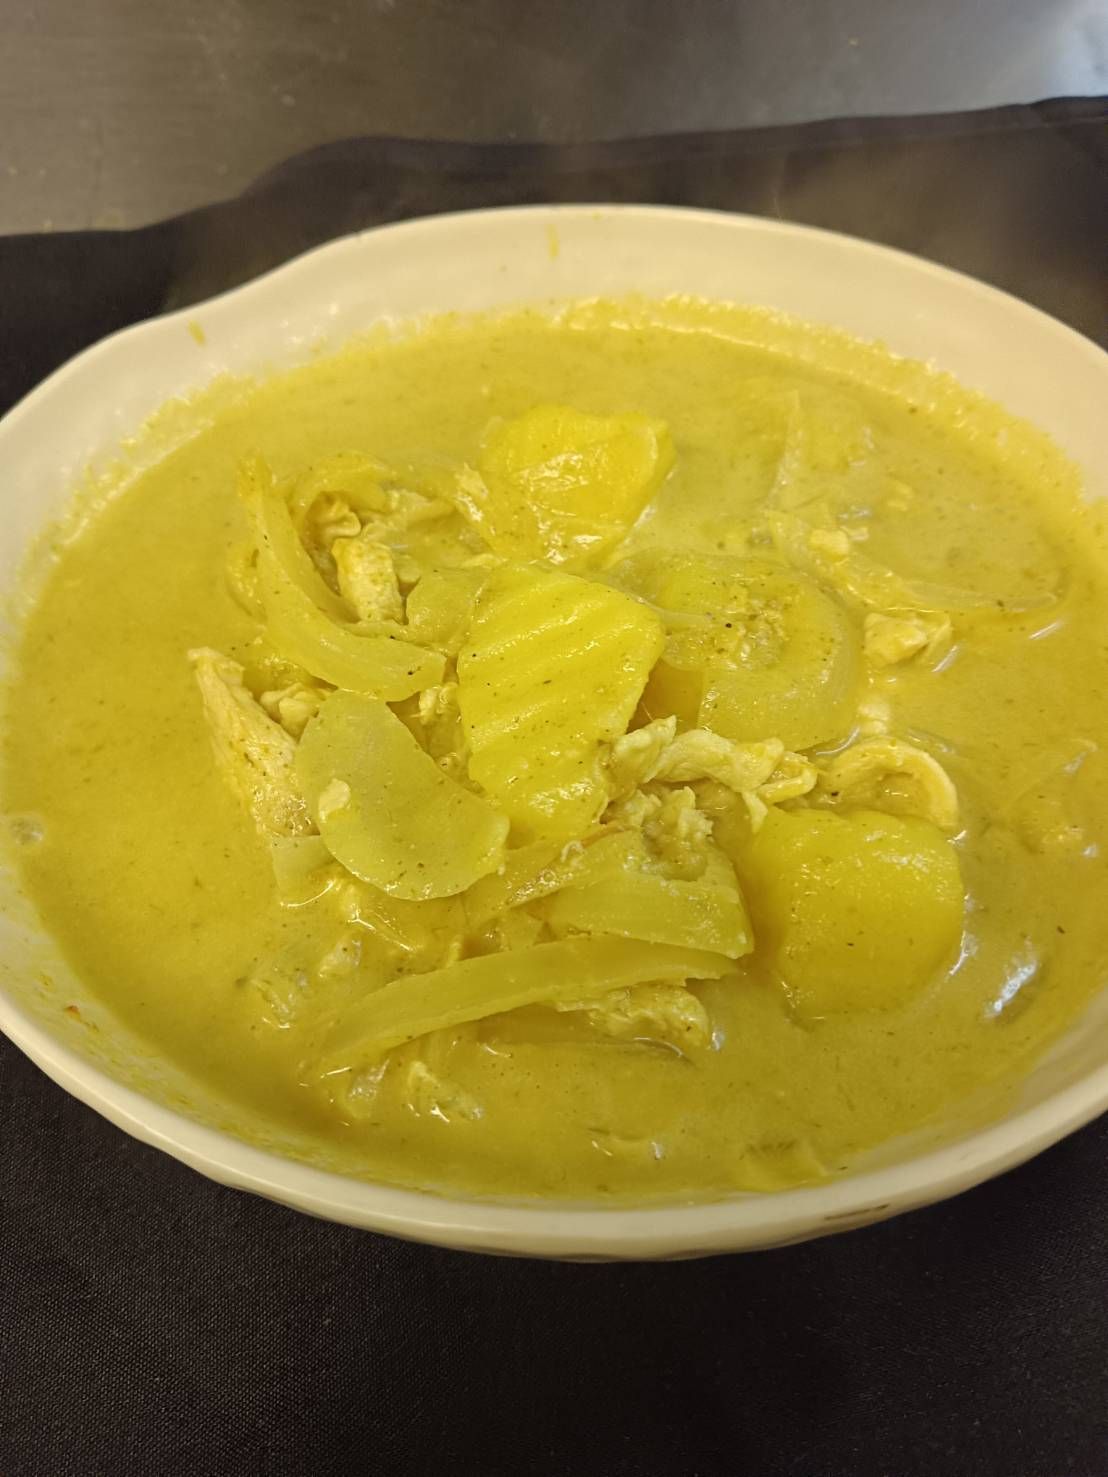 Yellow Curry at Pad Thai Restaurant - Clovis in Clovis, CA 93612 | YourMenu Online Ordering